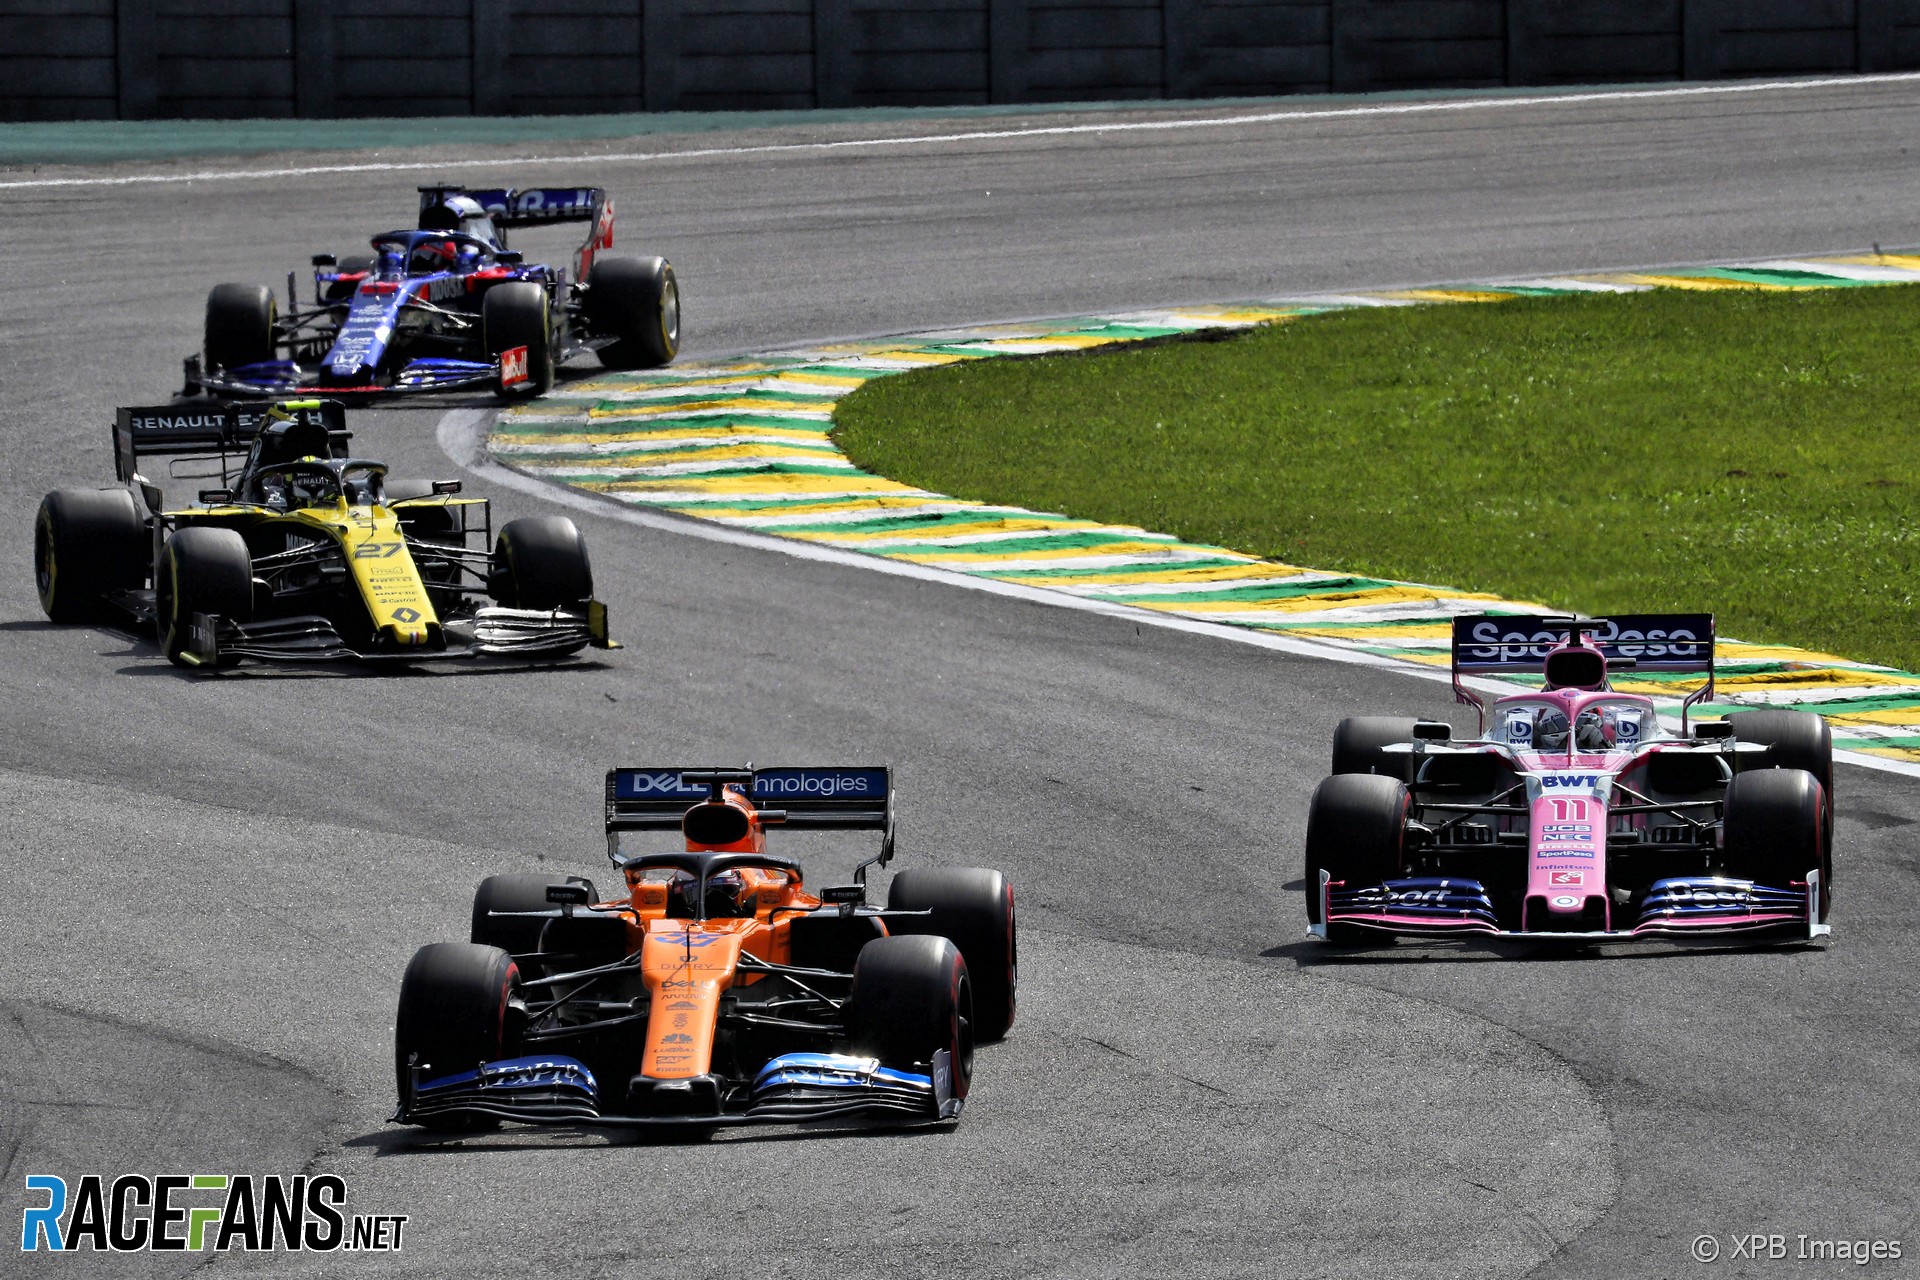 Carlos Sainz Jnr, McLaren, Interlagos, 2019